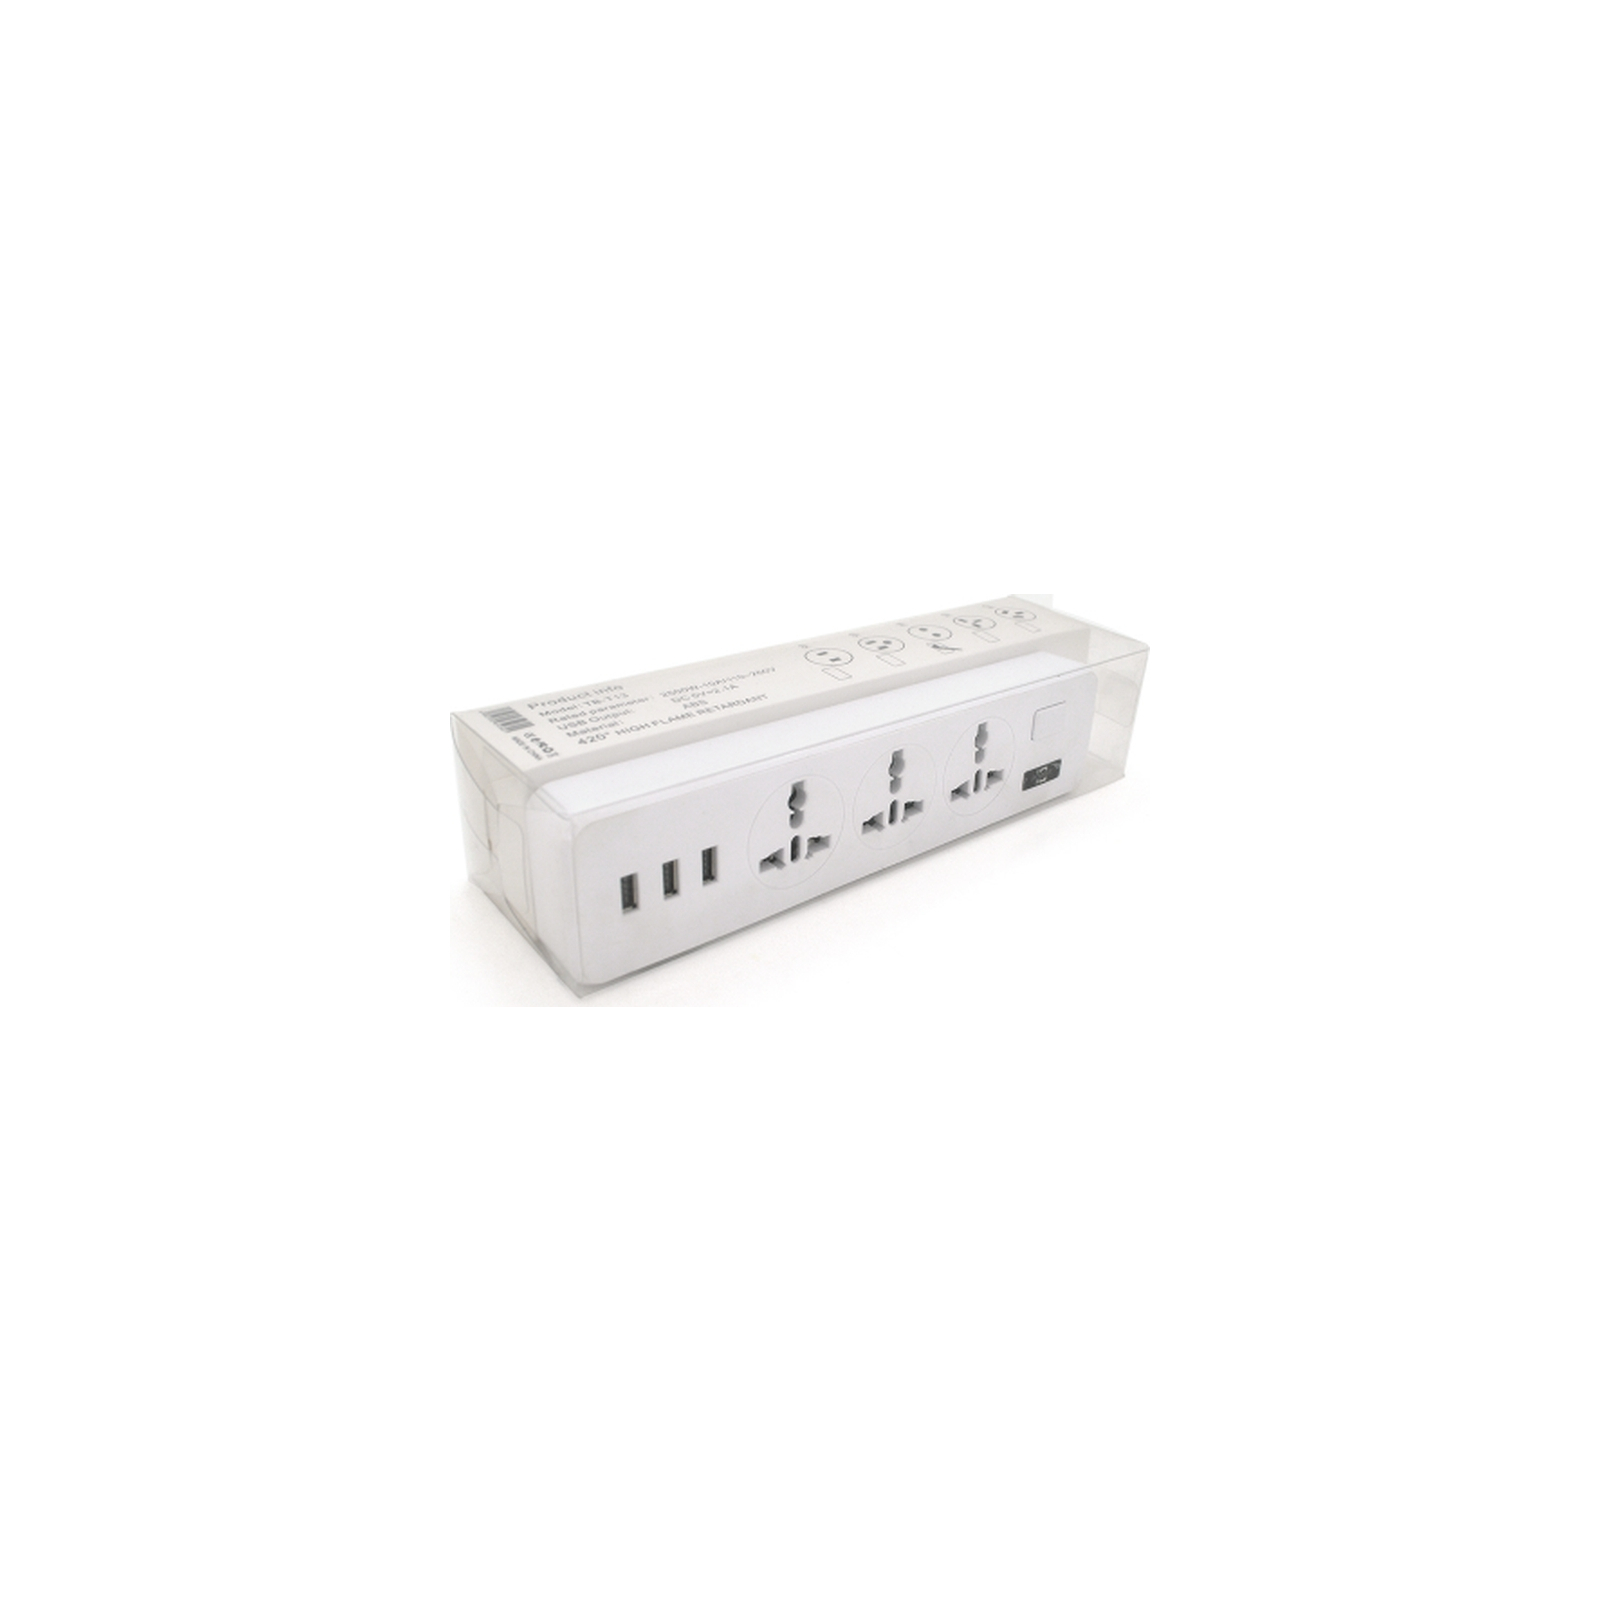 Сетевой фильтр питания Voltronic TВ-Т13, 3роз, 3*USB White (ТВ-Т13-White) изображение 2